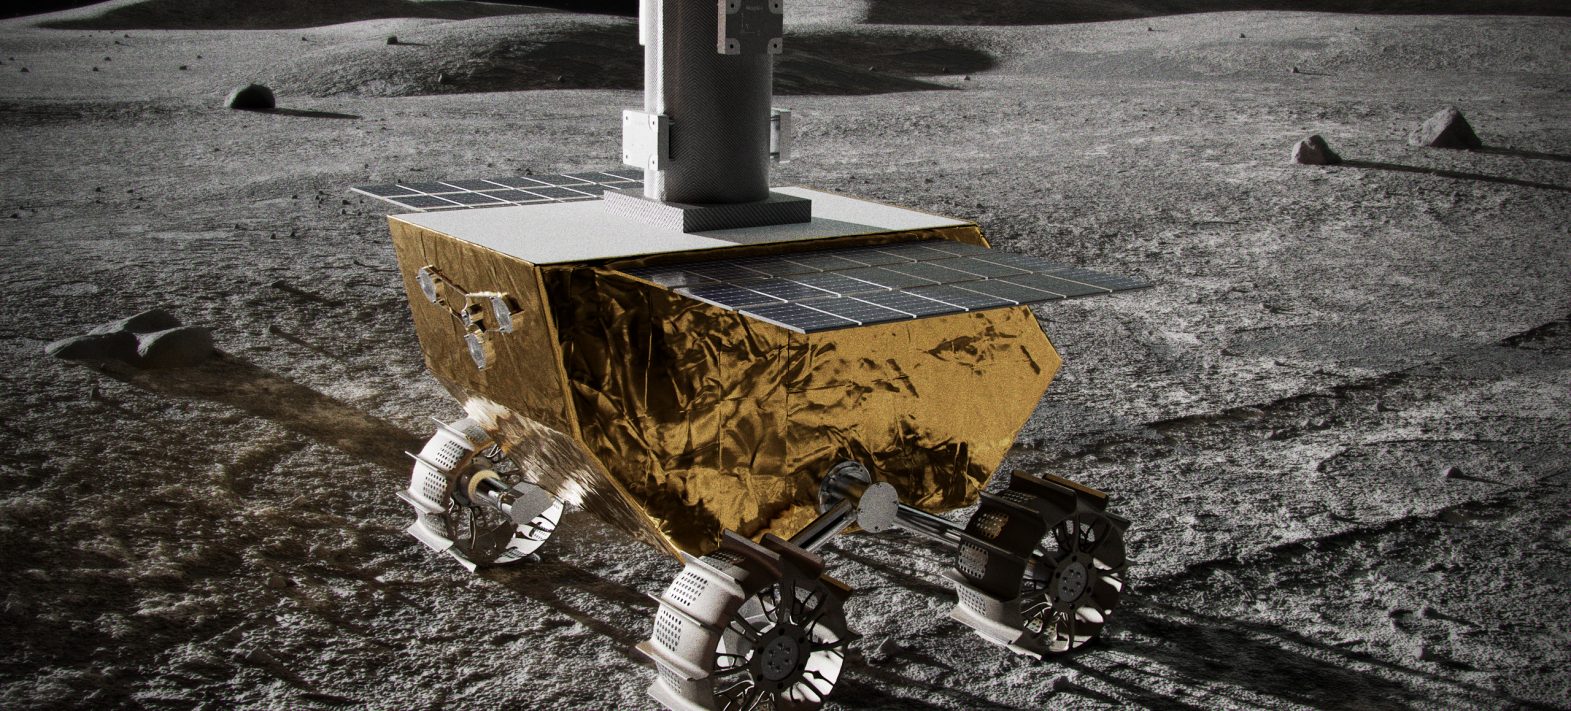 Lunar Vertex (NASA)